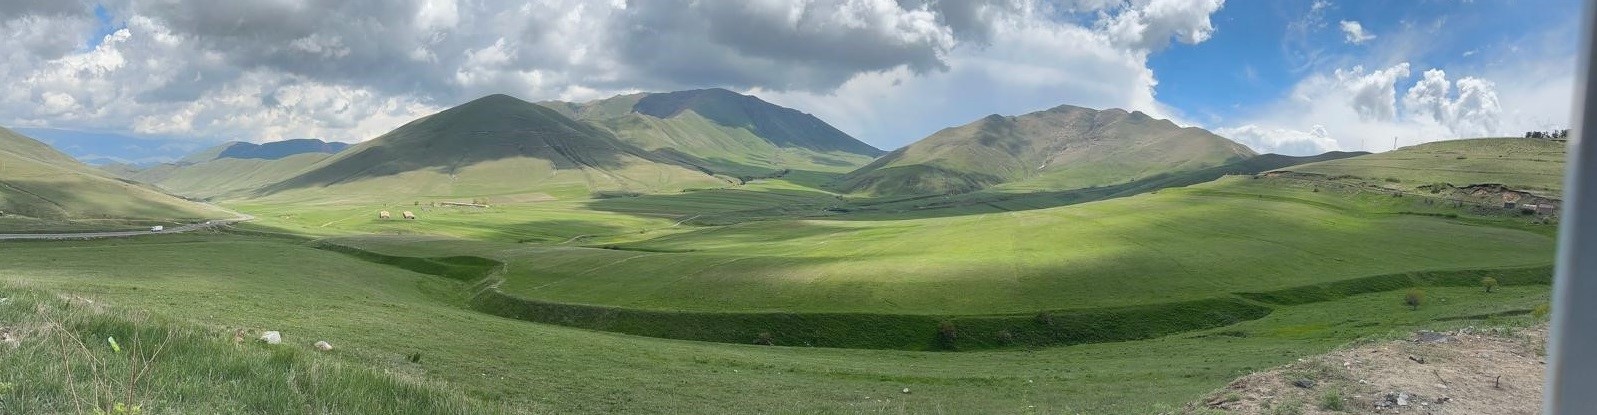 Landscape Armenia